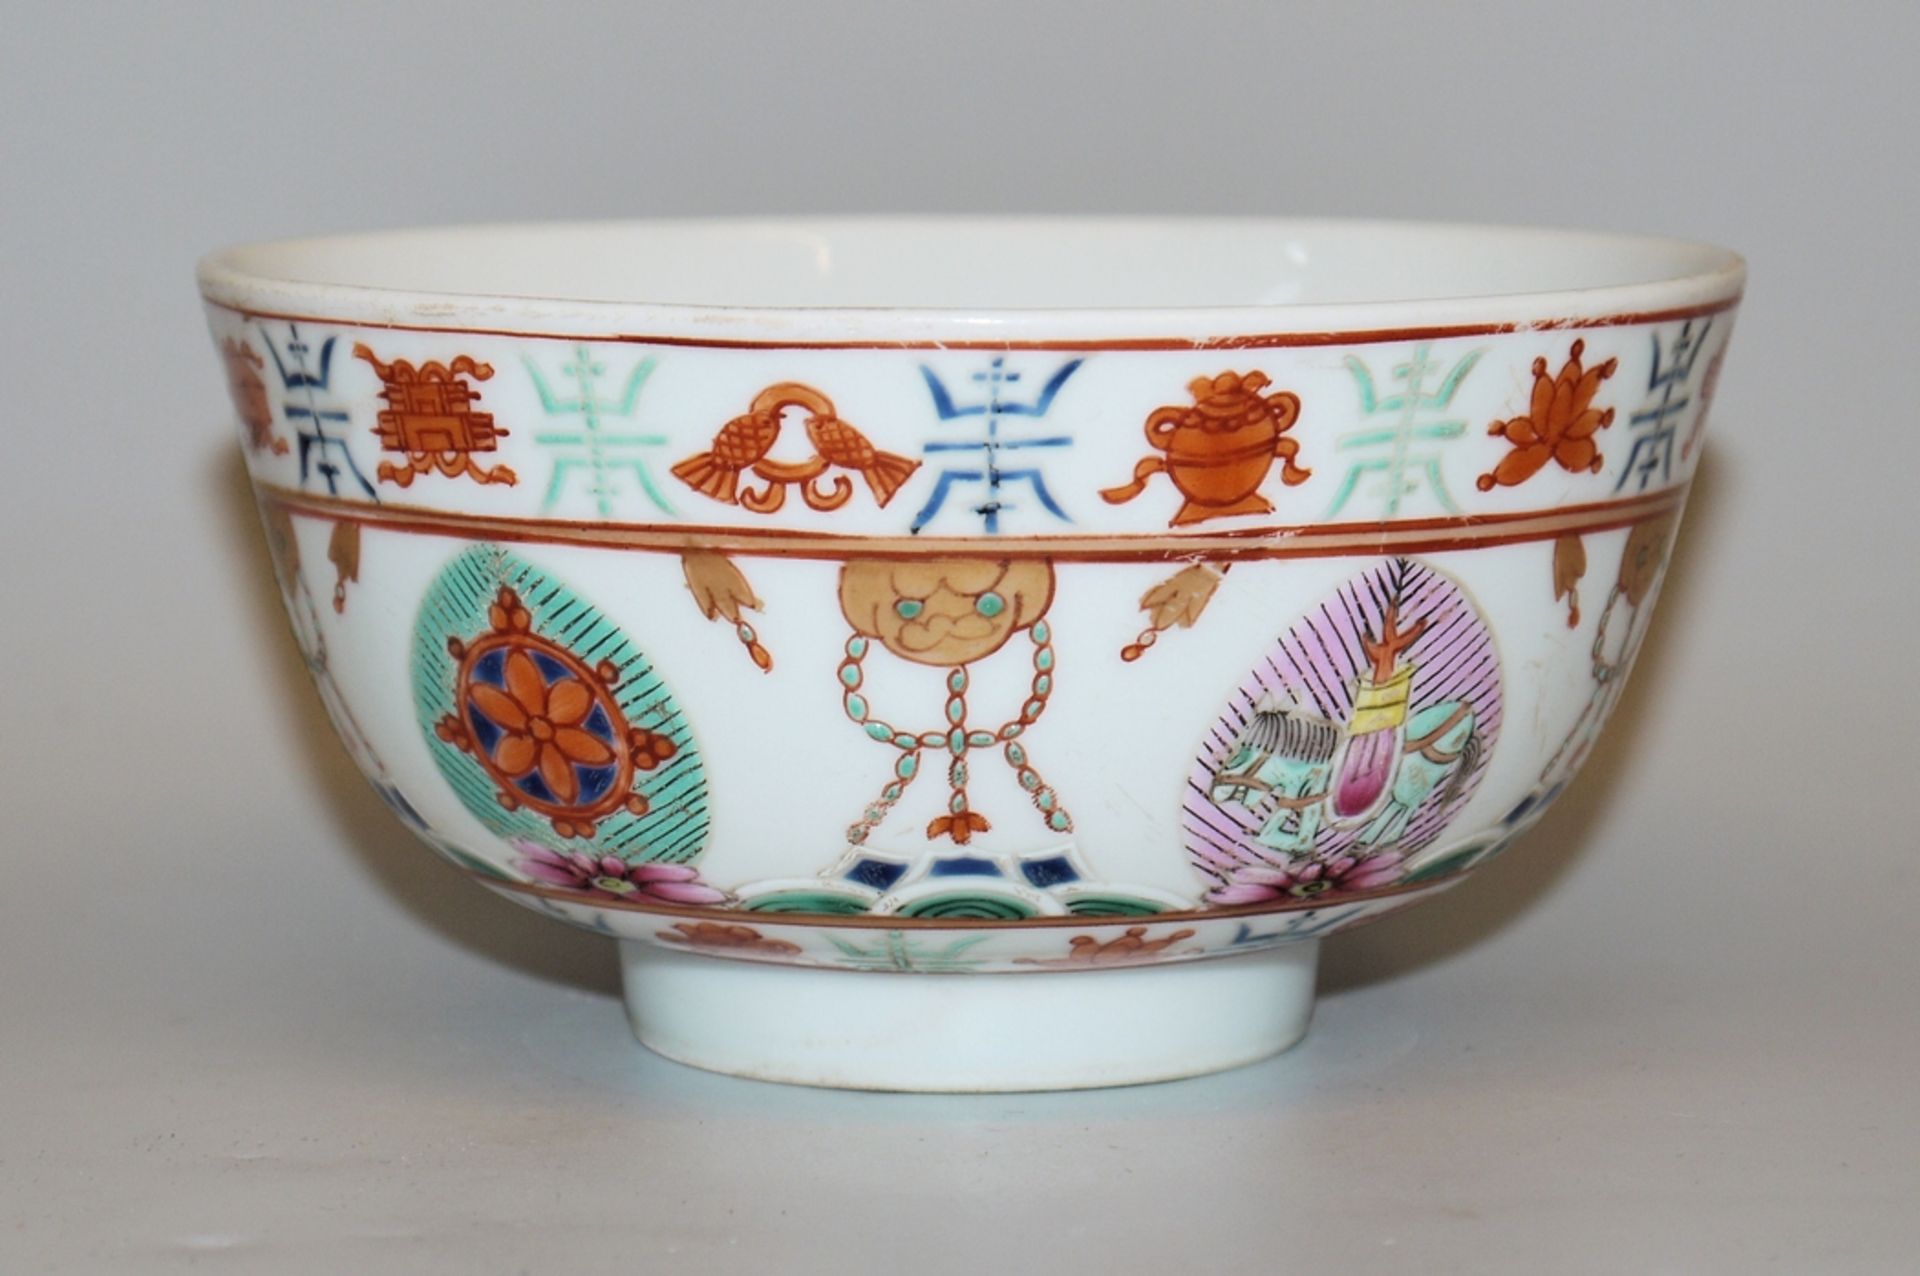 Food bowl with Buddhist symbolism, China 20th century - Image 2 of 4